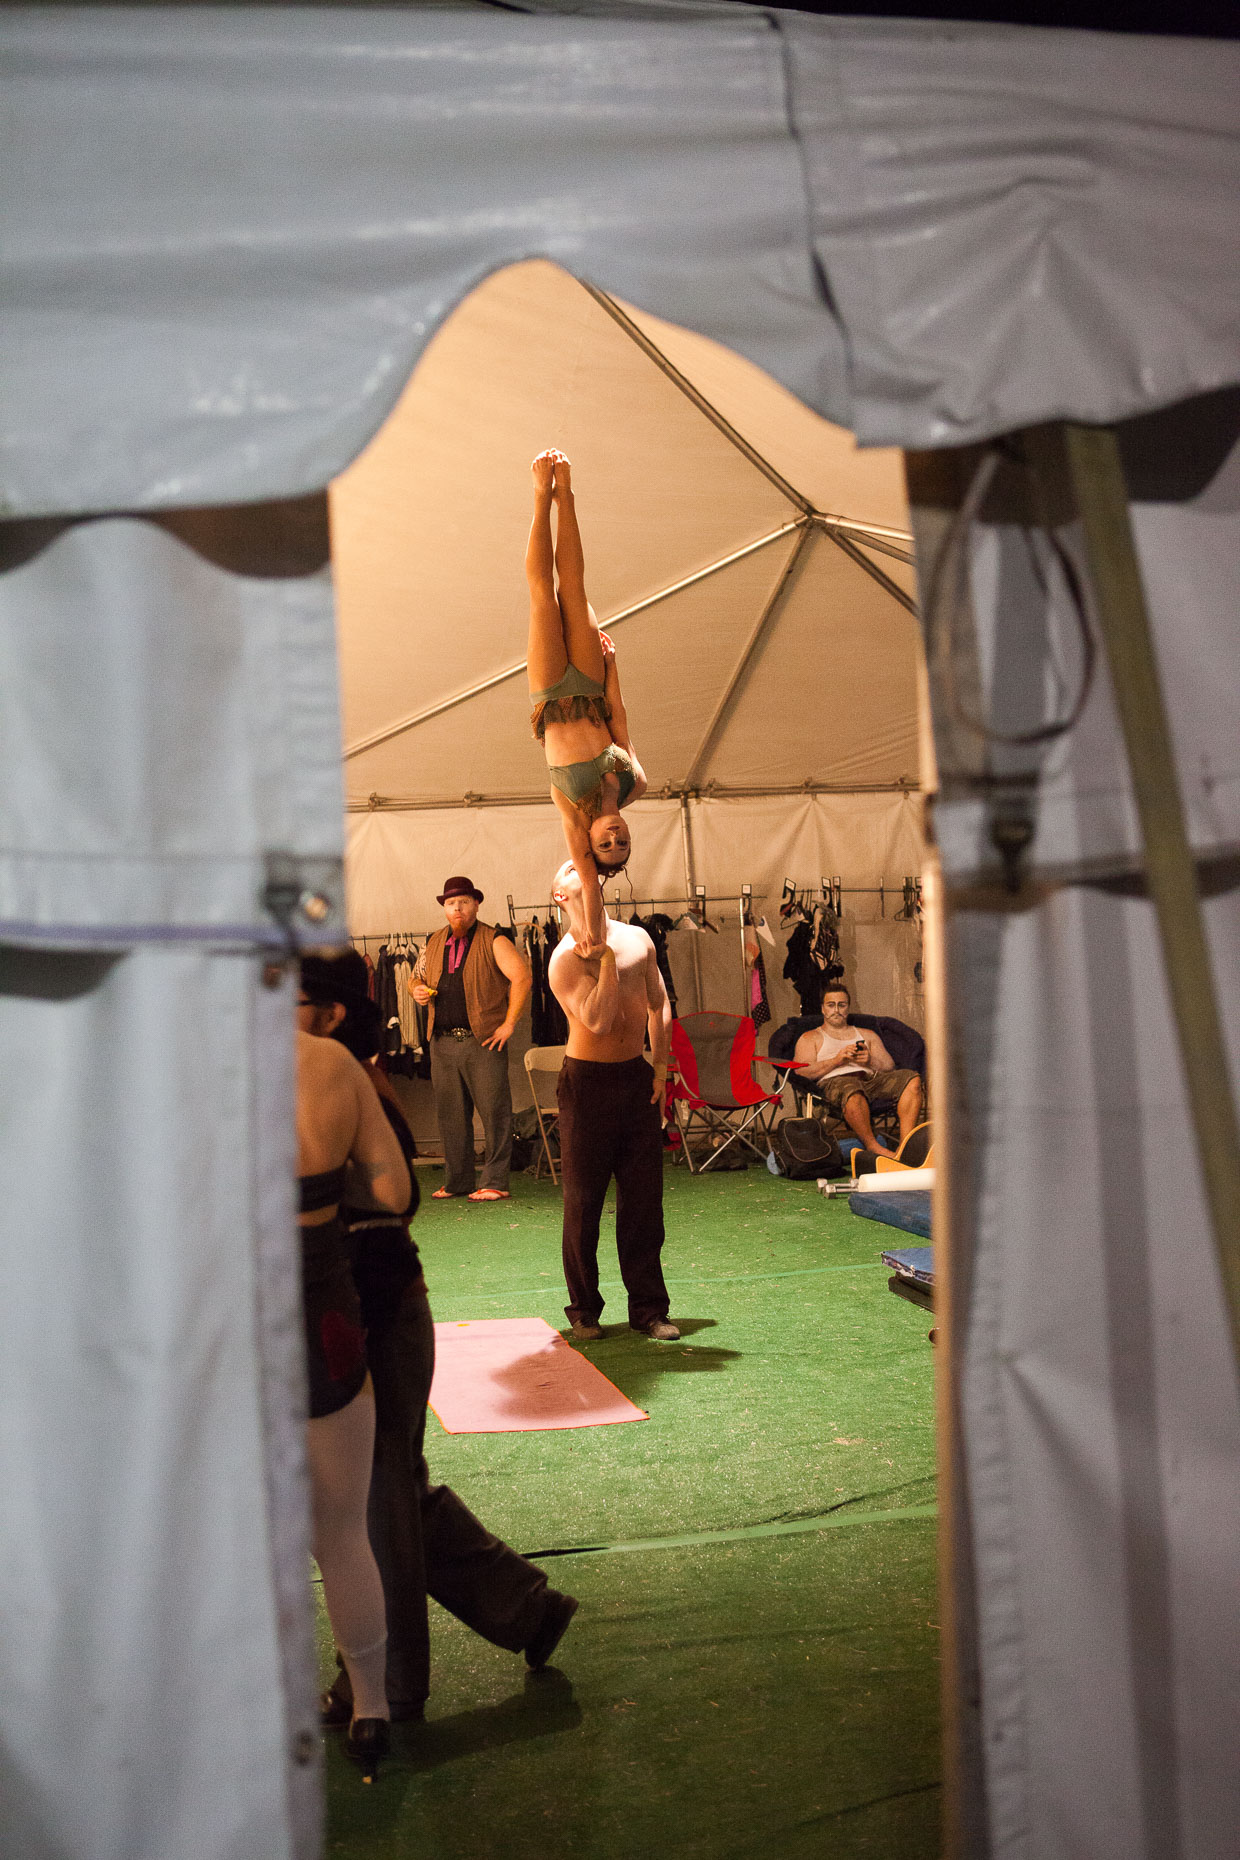 Performers practicing balance at Cirque Berzerk circus performers, by David Zaitz